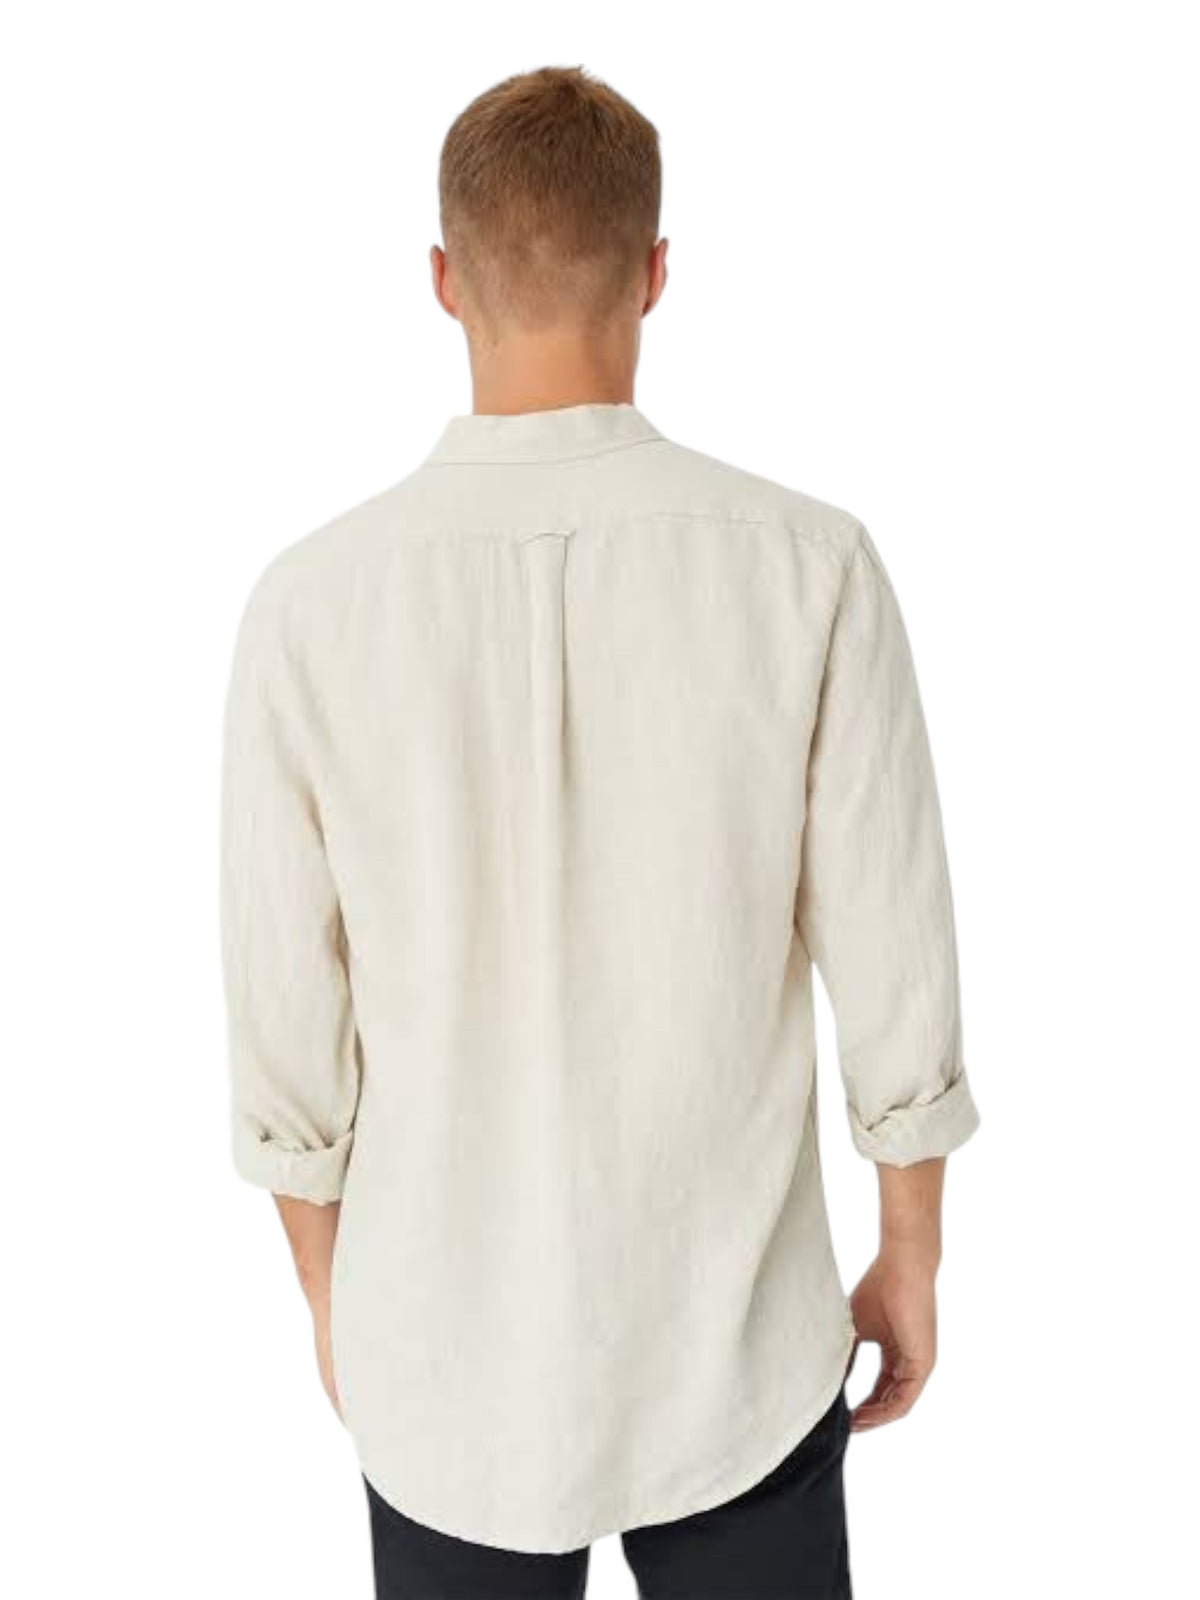 Tennyson Linen Longsleeve Shirt - Oatmeal